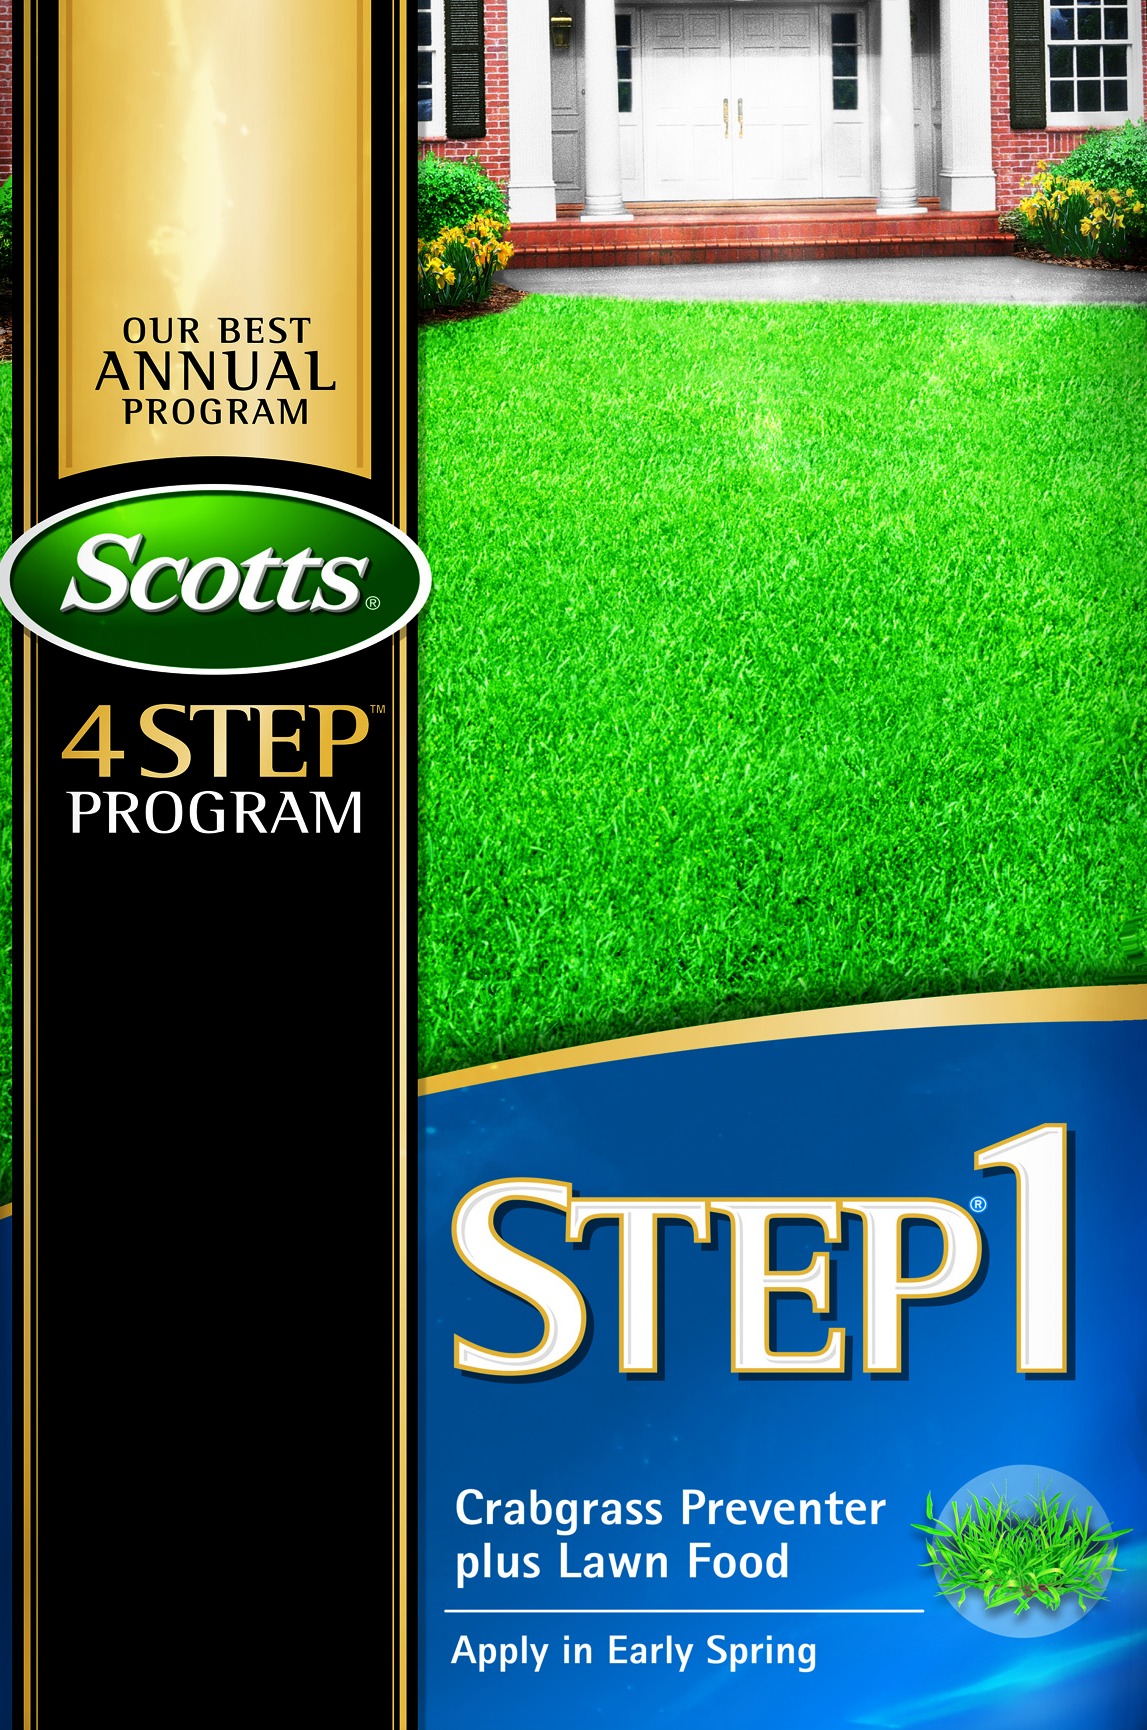 scotts-4-step-annual-lawn-program-herbeins-garden-center-pa-lehigh-valley-nursery-landscaping